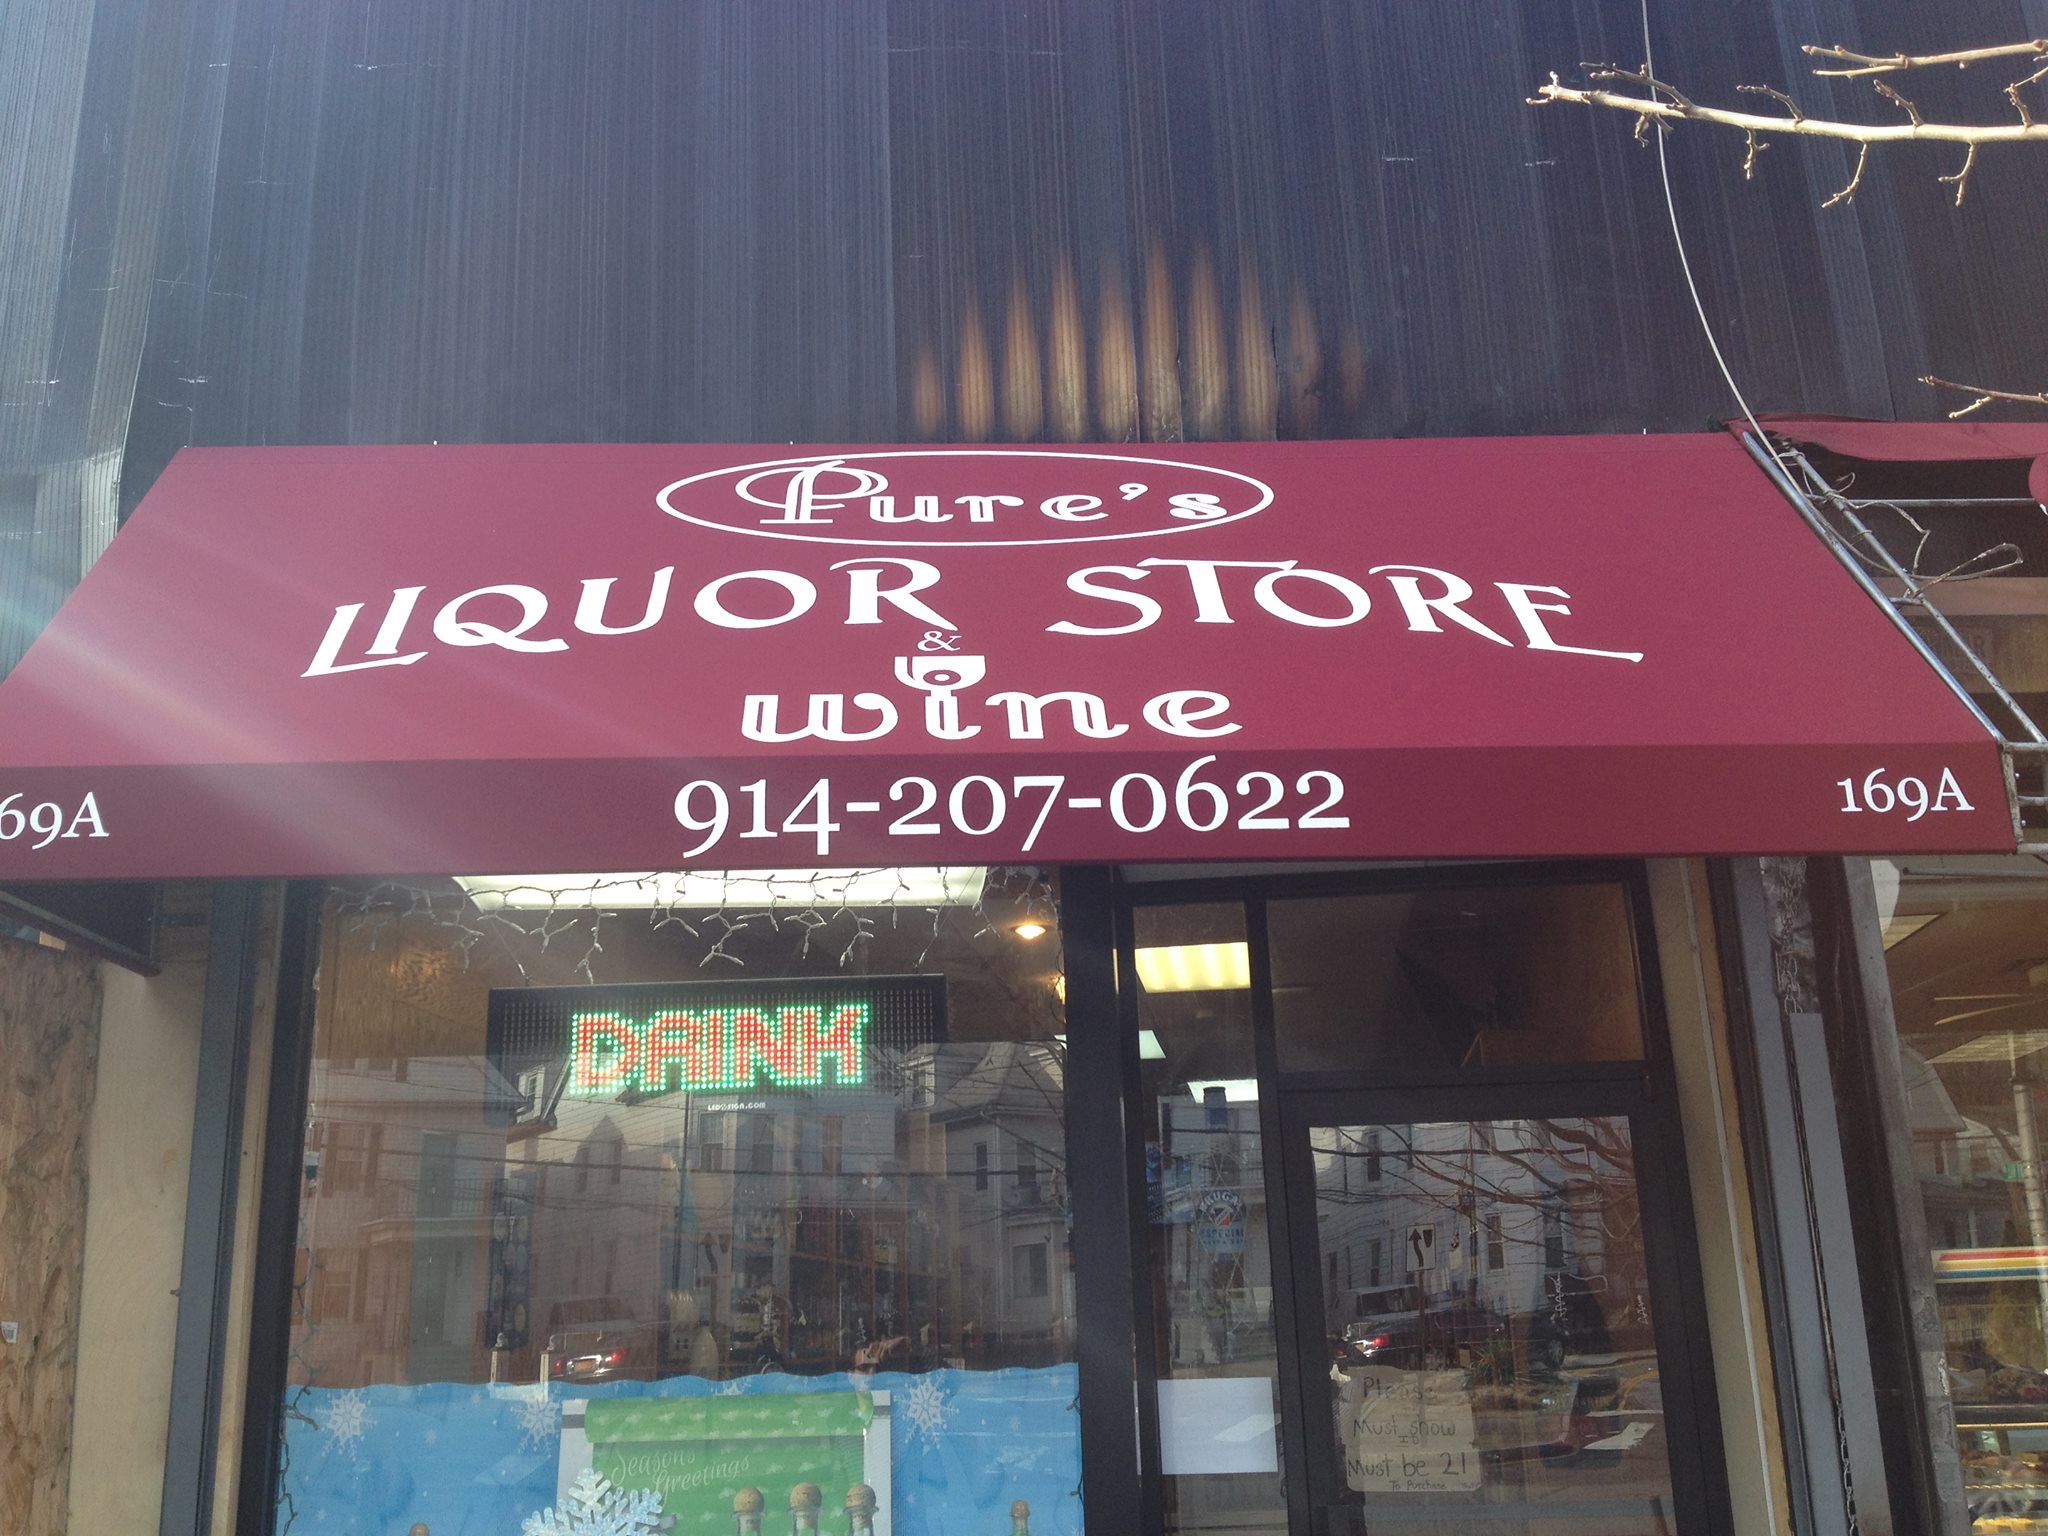 Pures Liquor Store